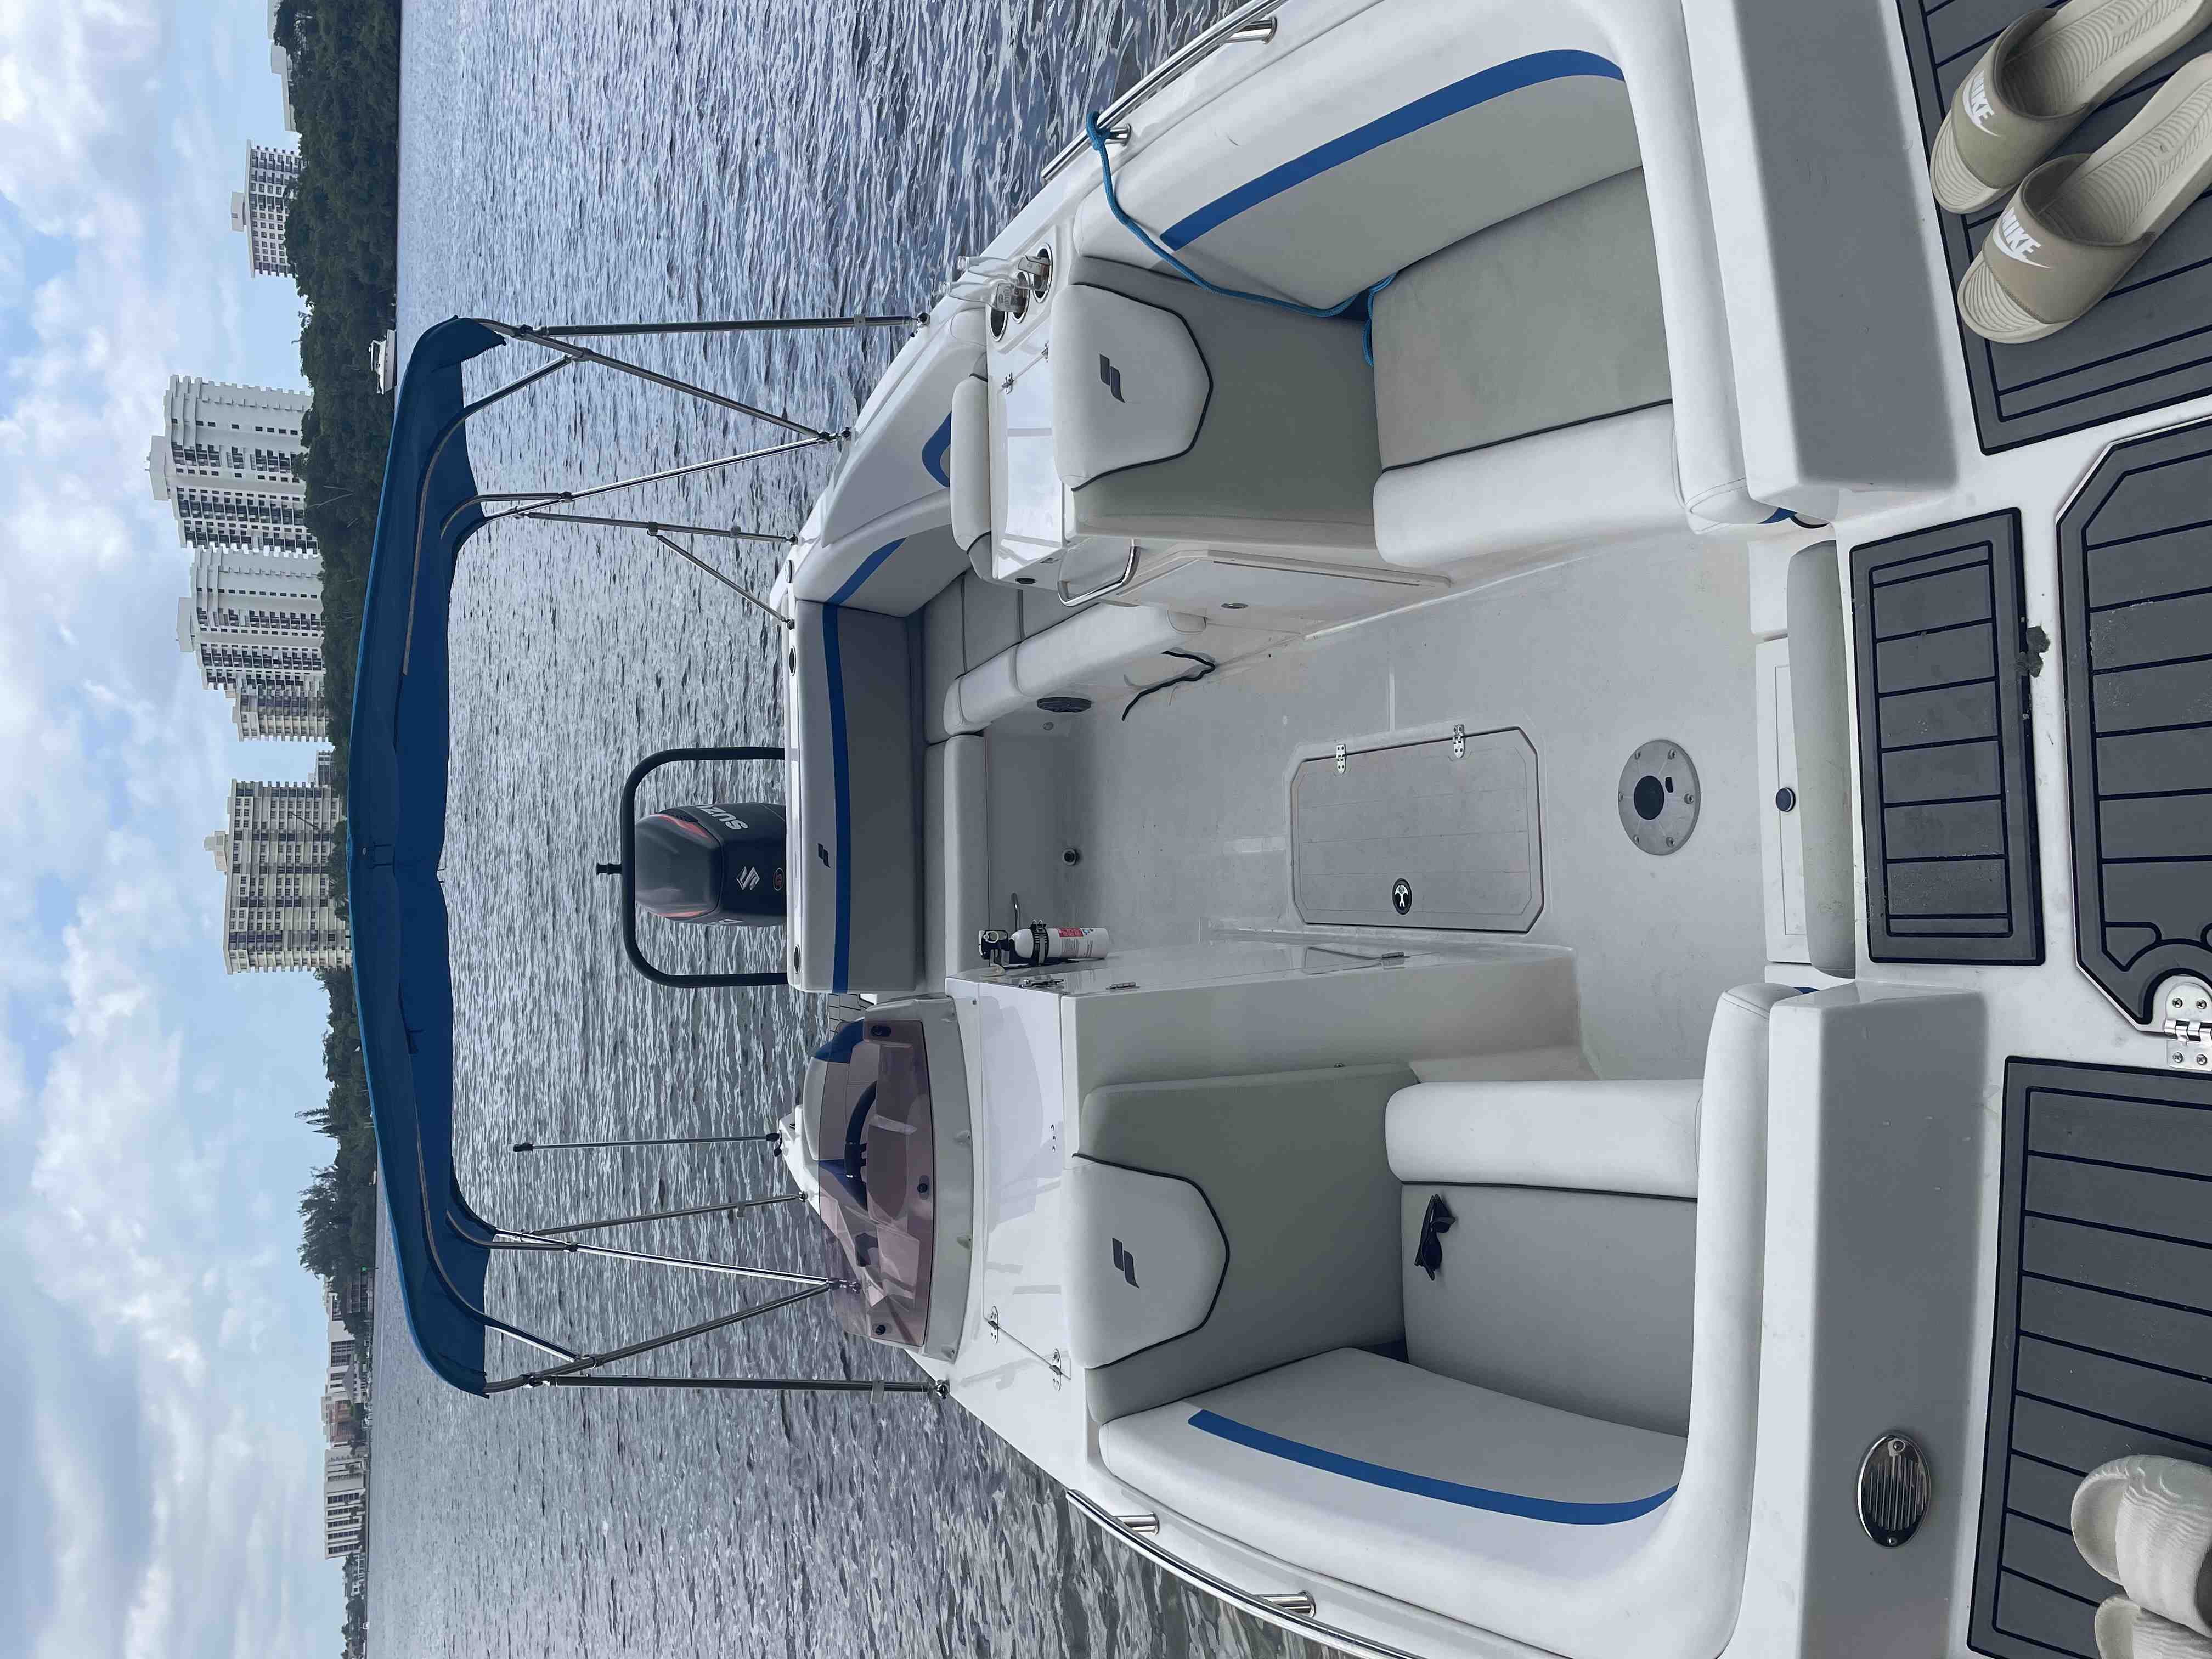  boat rentals Florida FORT LAUDERDALE Florida  STARCRAFT SVX 231 2021 23 